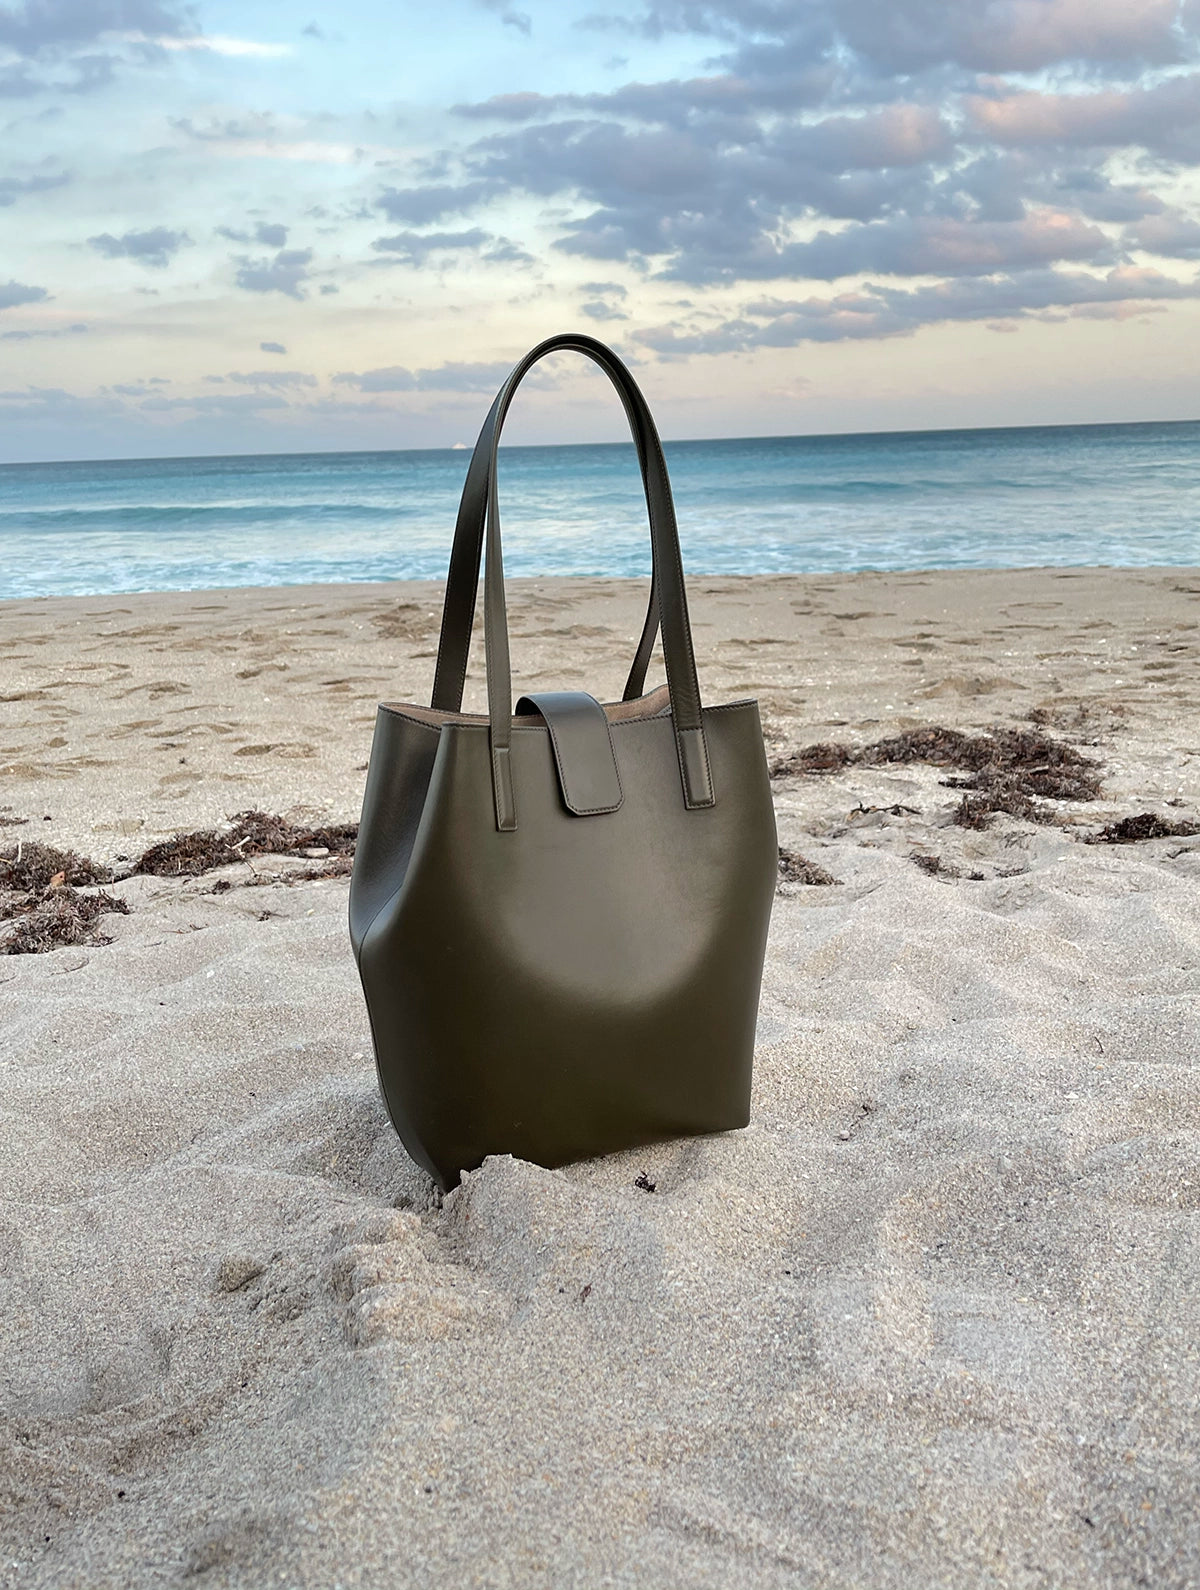 Luxury Green Bag sitting on the beach, military green smooth matte leather, medium shoulder bag by Chandra Keyser